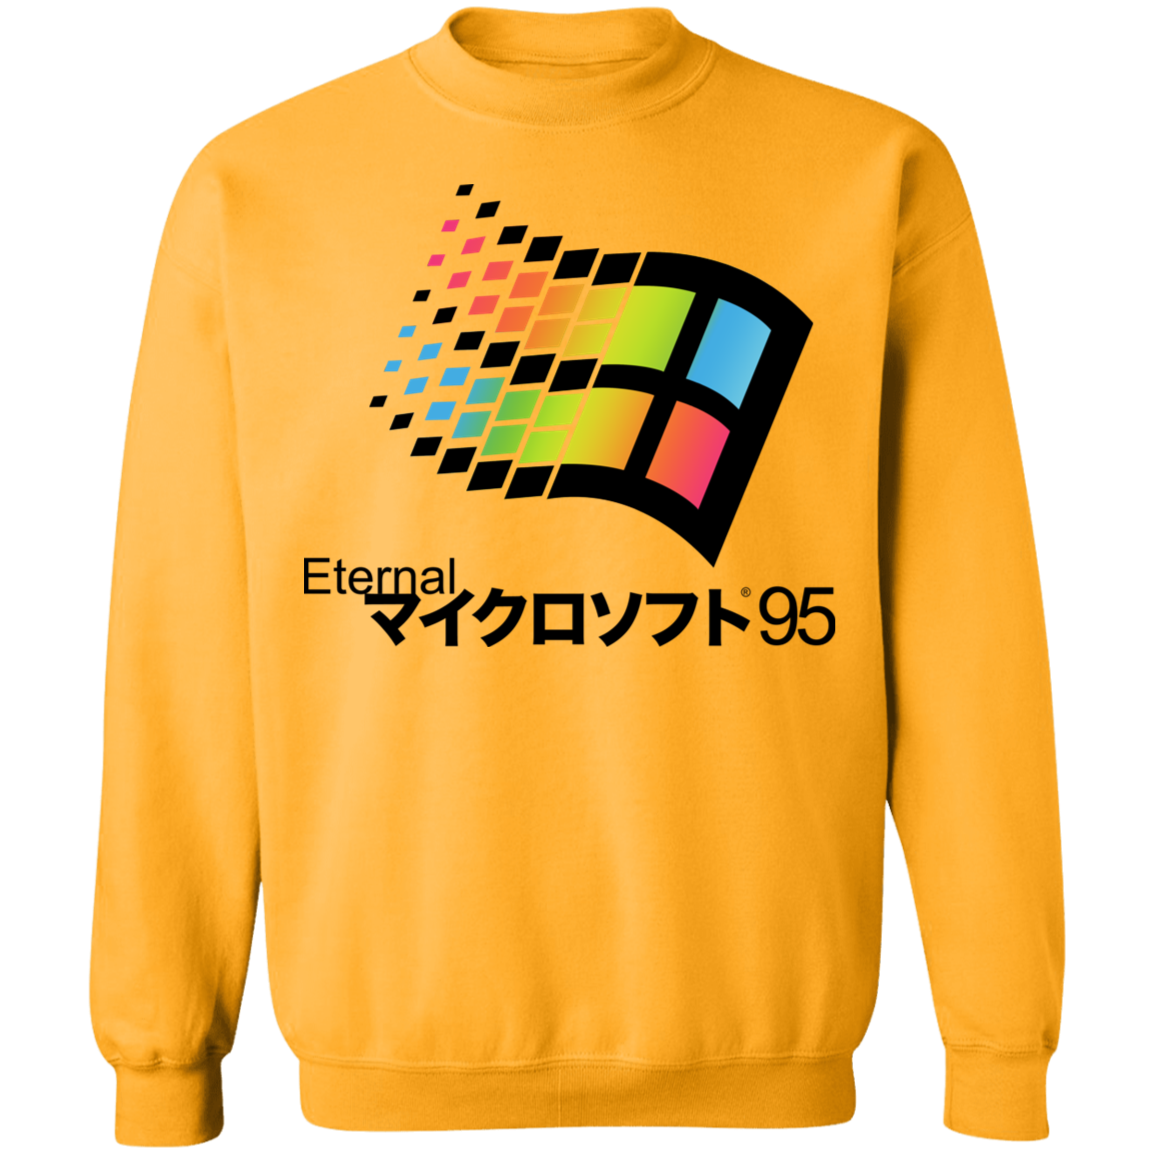 Eternal 95 Crewneck Sweatshirt by palm-treat.myshopify.com for sale online now - the latest Vaporwave &amp; Soft Grunge Clothing